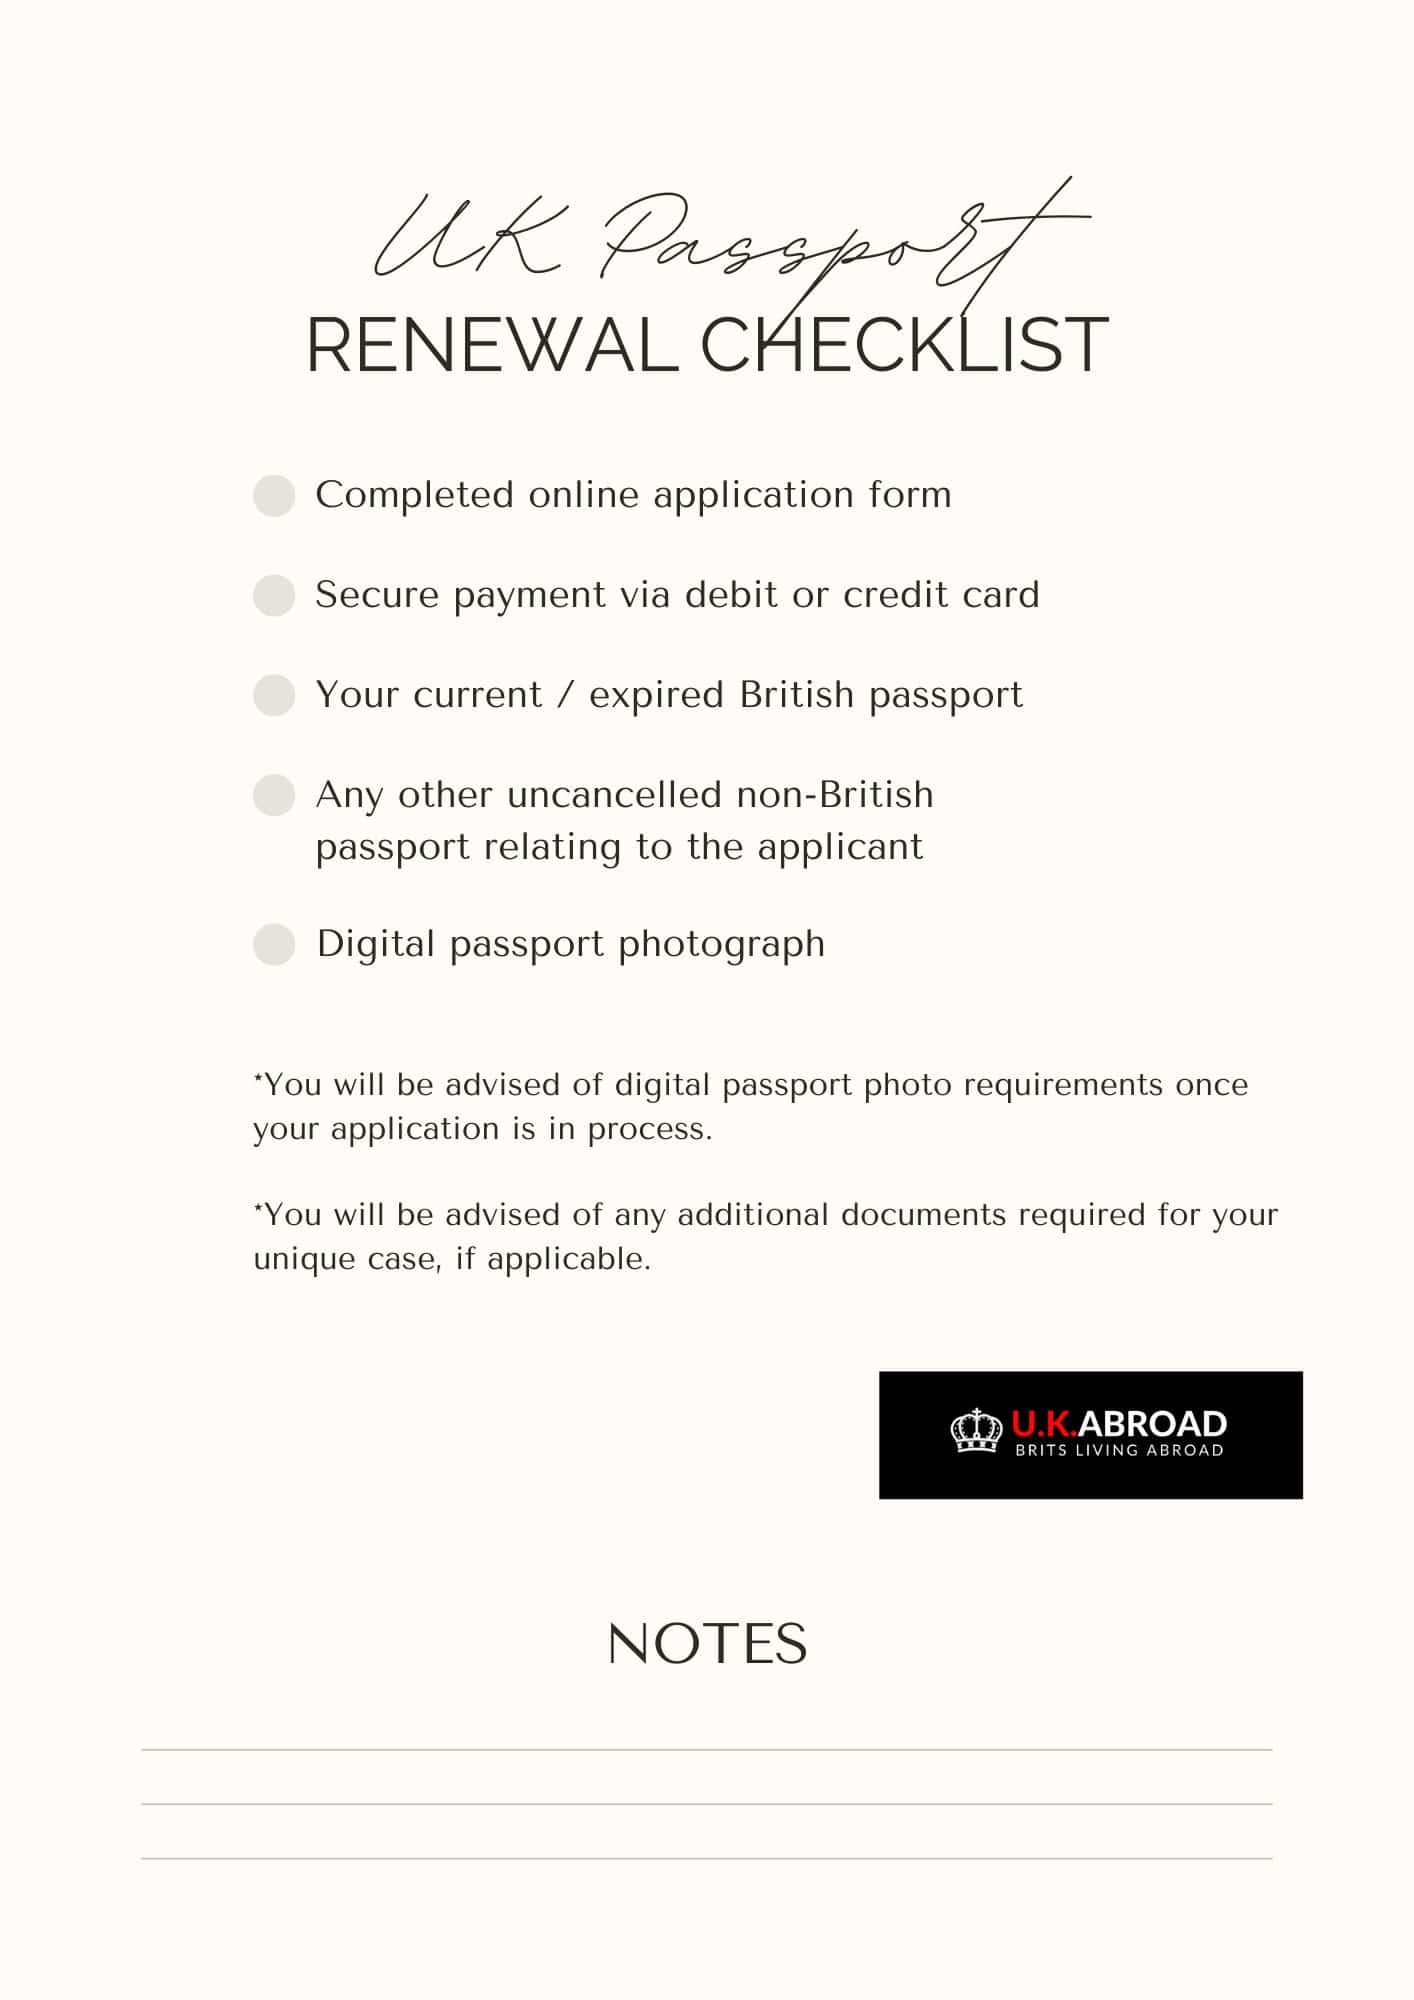 Image of pdf checklist for UK passport renewal